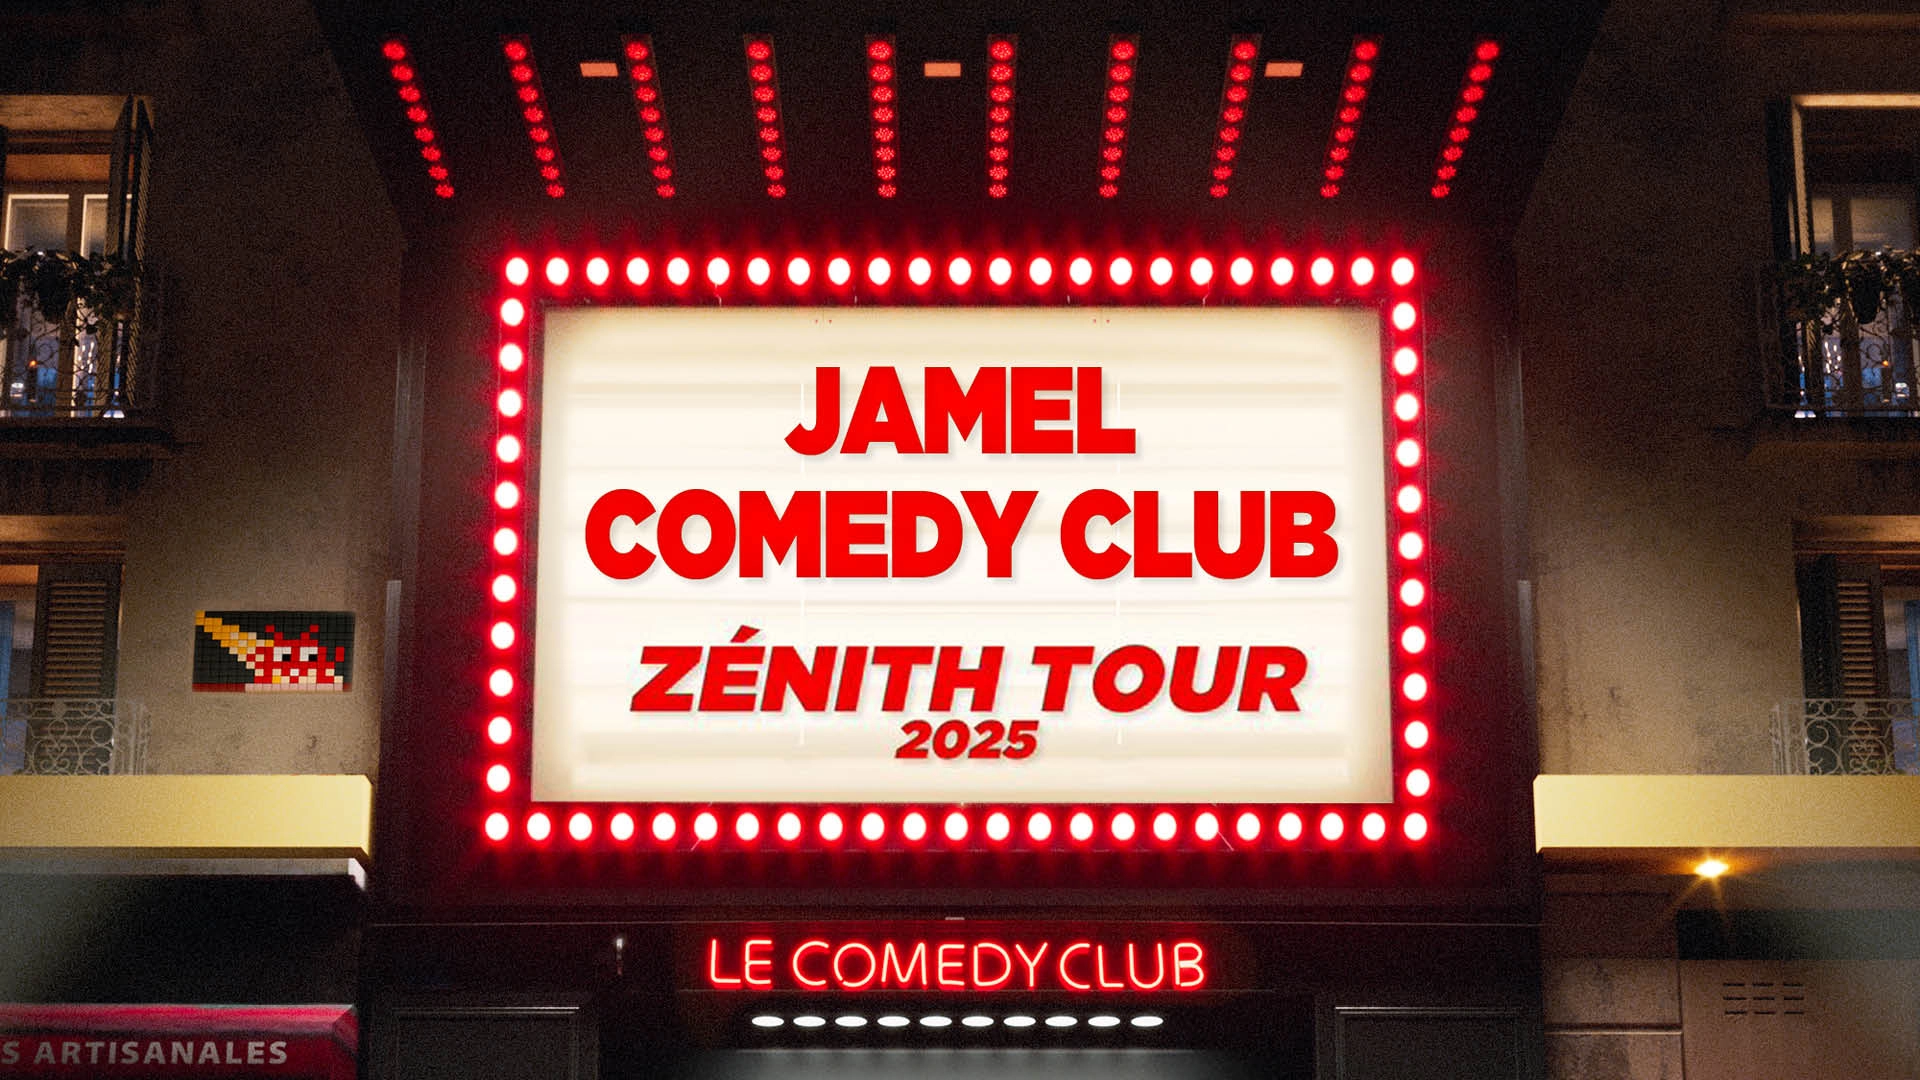 Jamel Comedy Club Zenith Tour at Arkea Arena Tickets